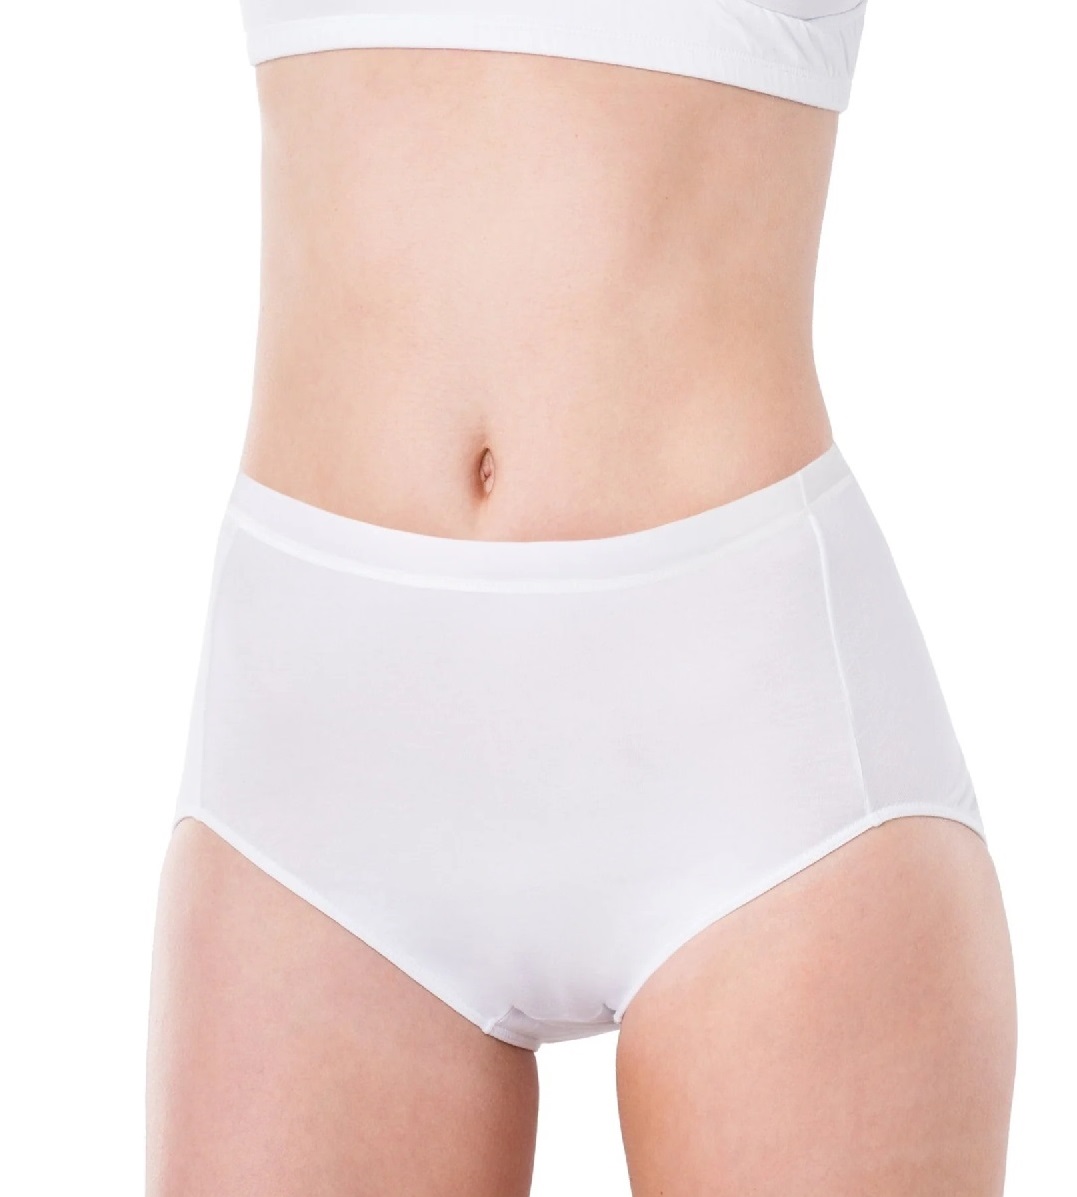 Elita Soft Cotton Panty High Cut Brief-4026 - Basics by Mail